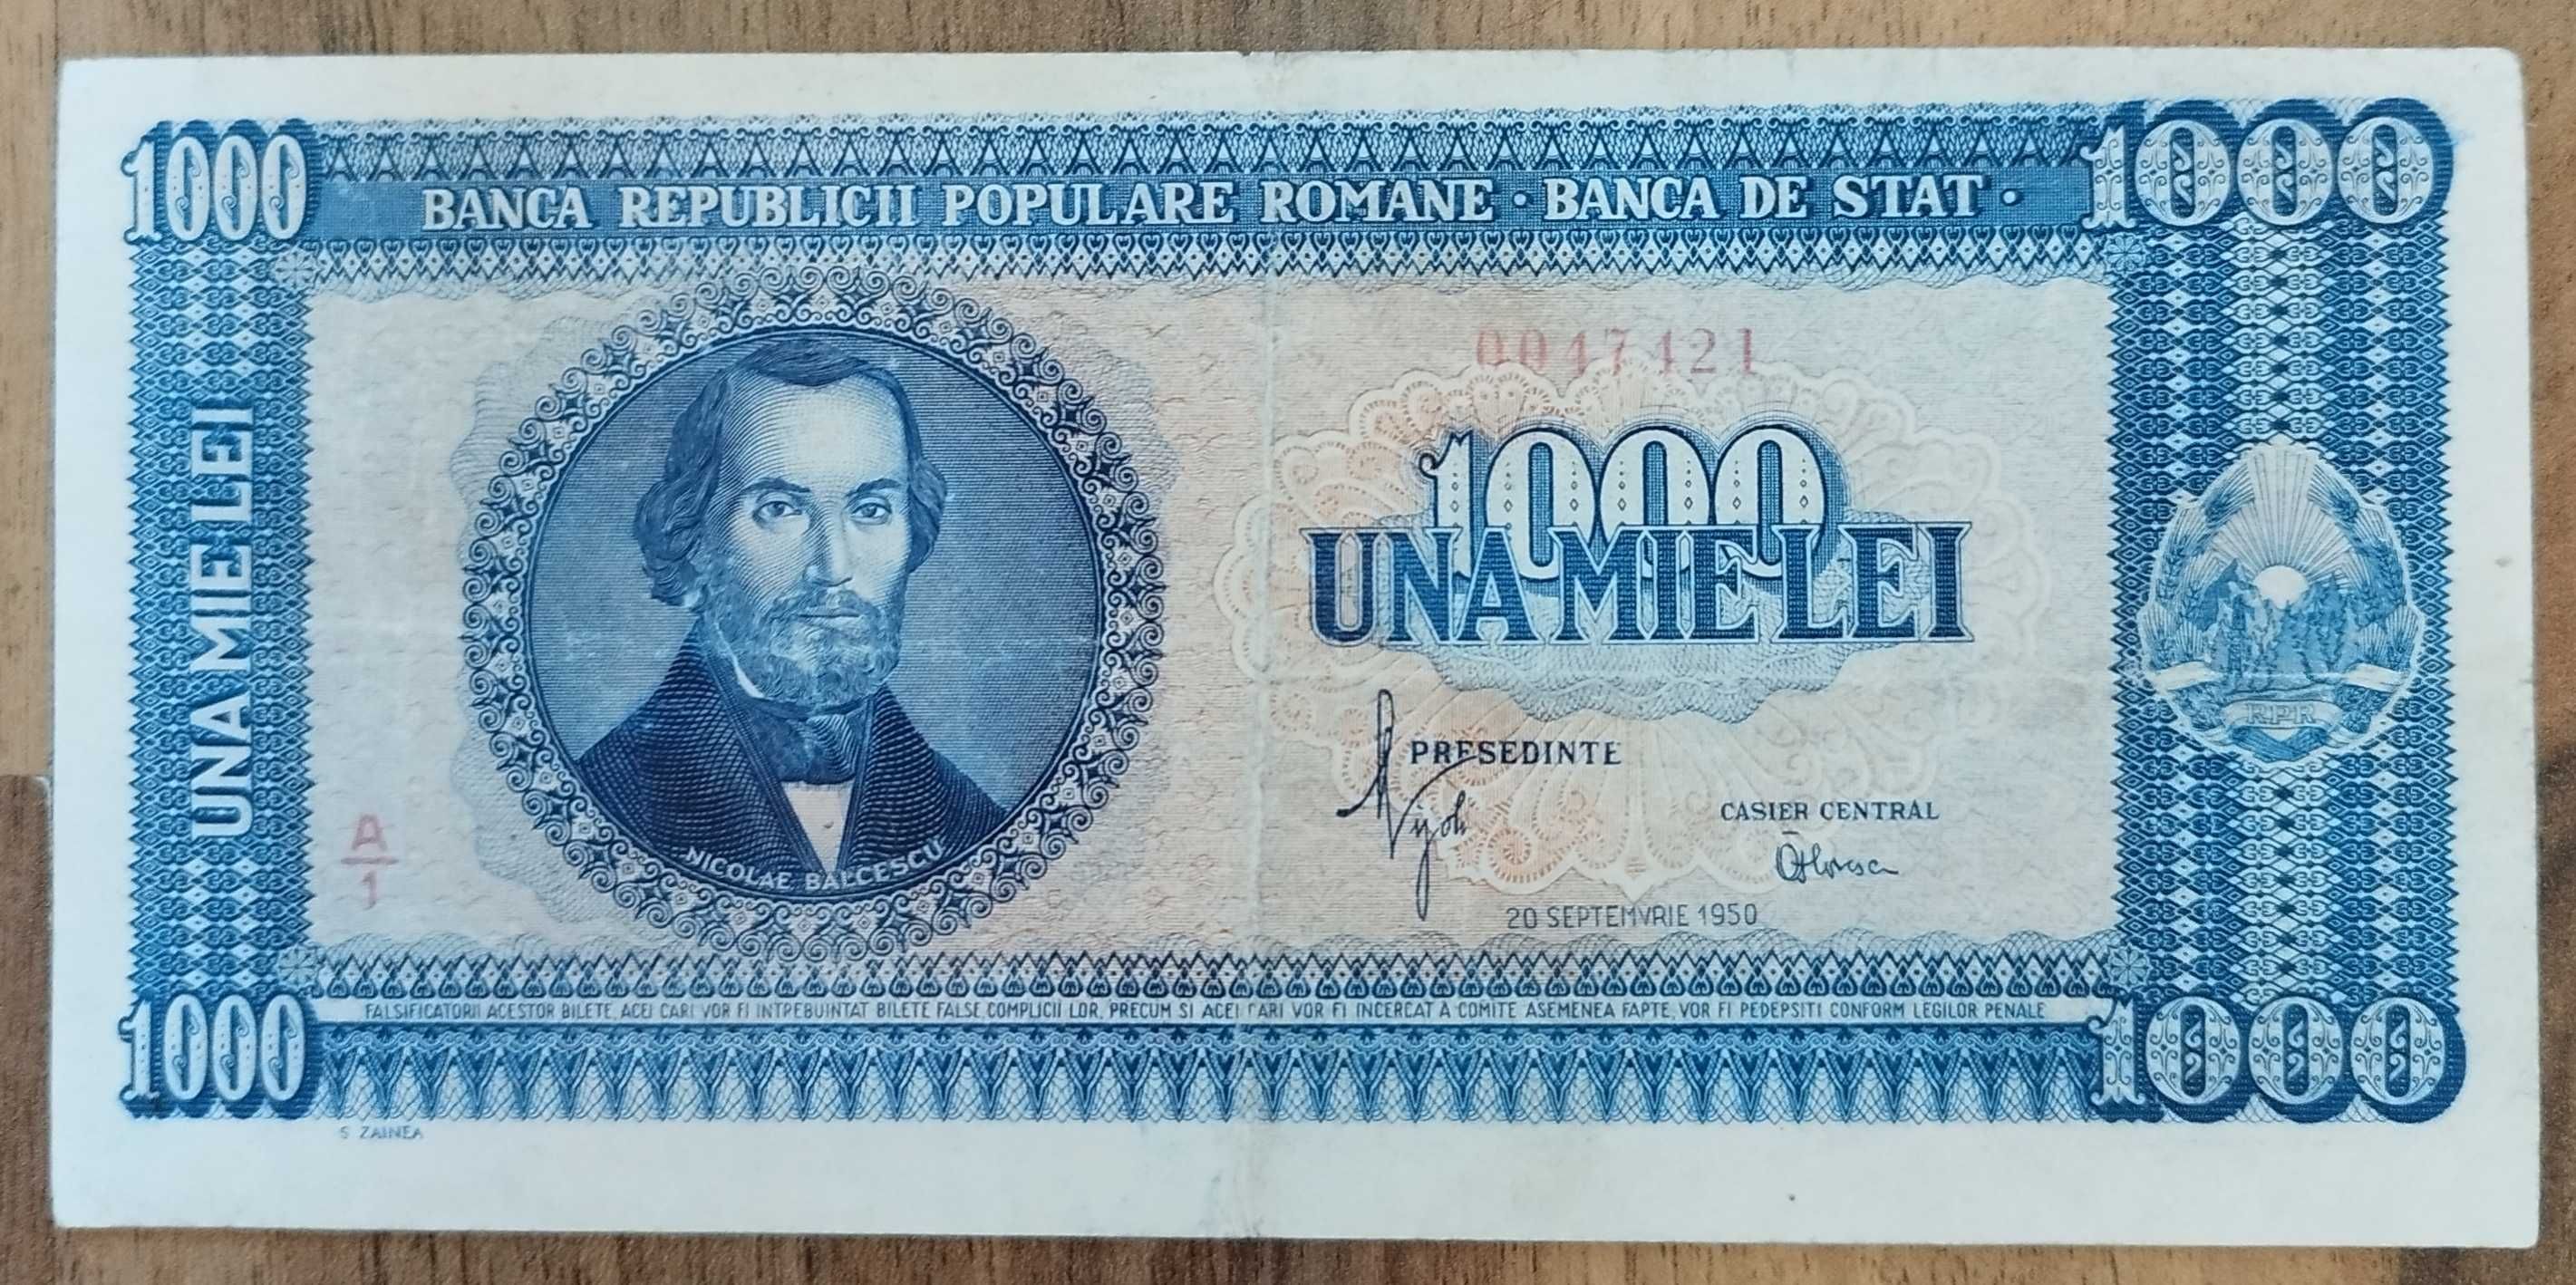 VÂND bancnote românești